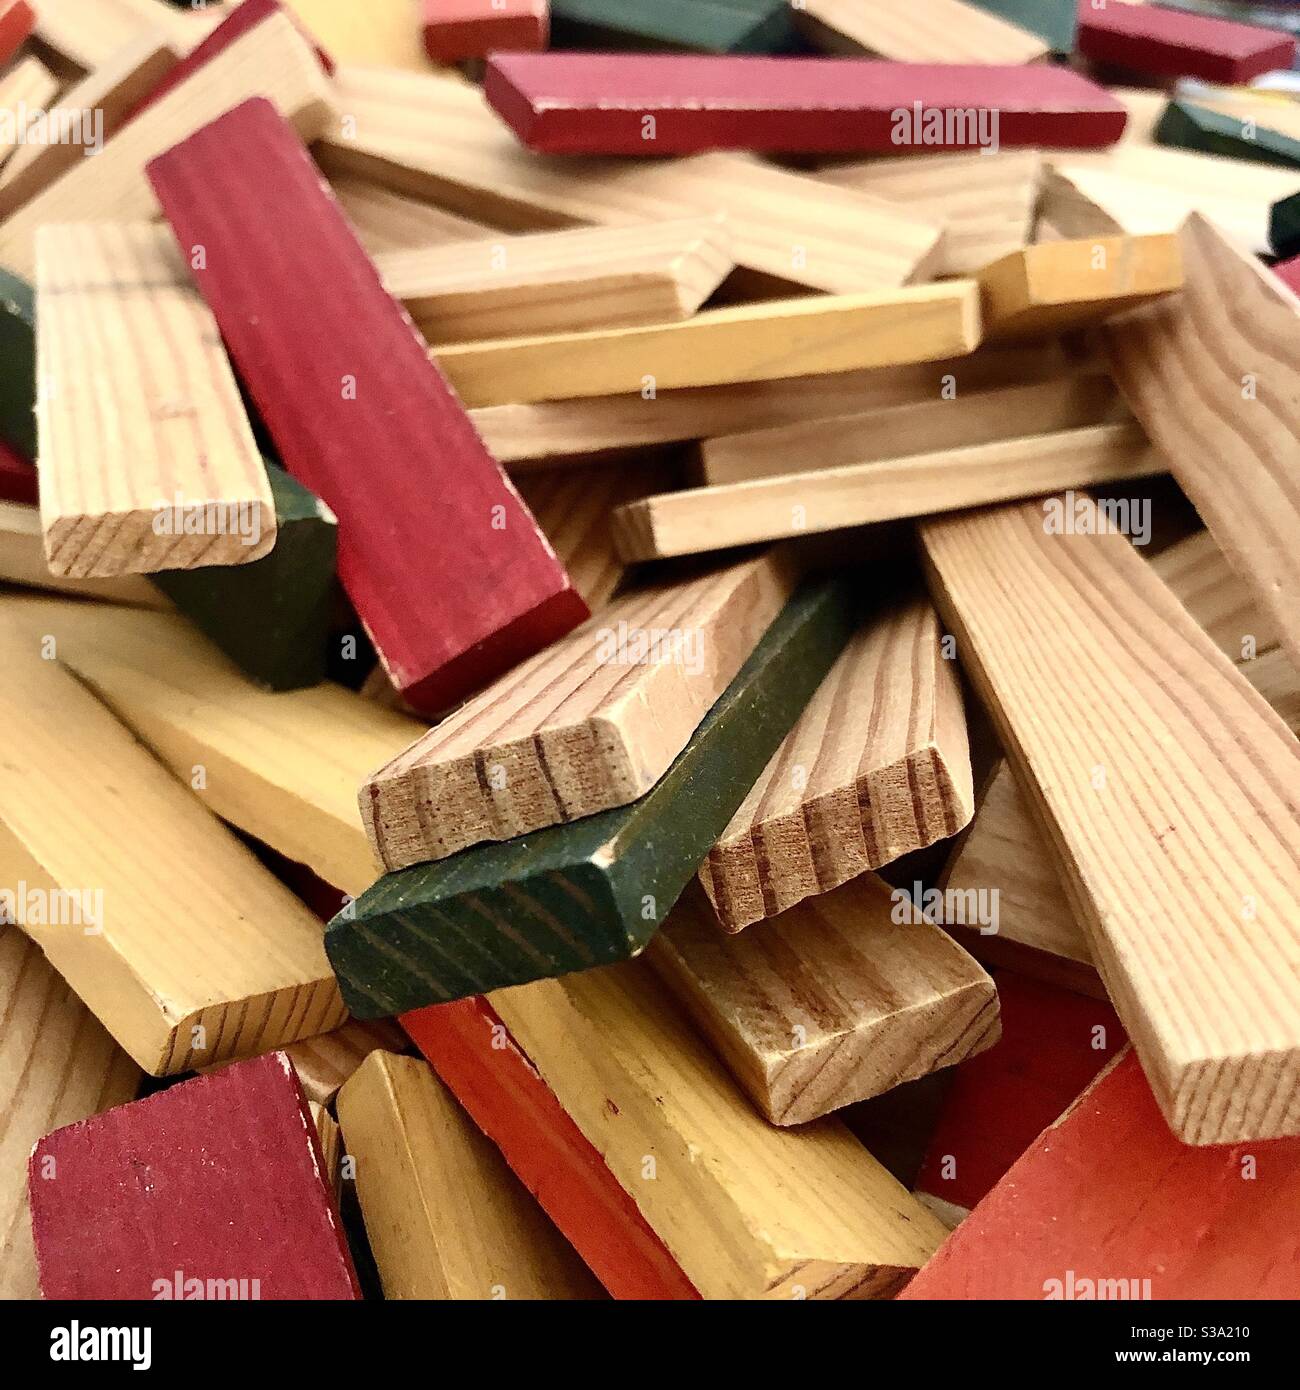 Pile of Kapla building blocks. Stock Photo